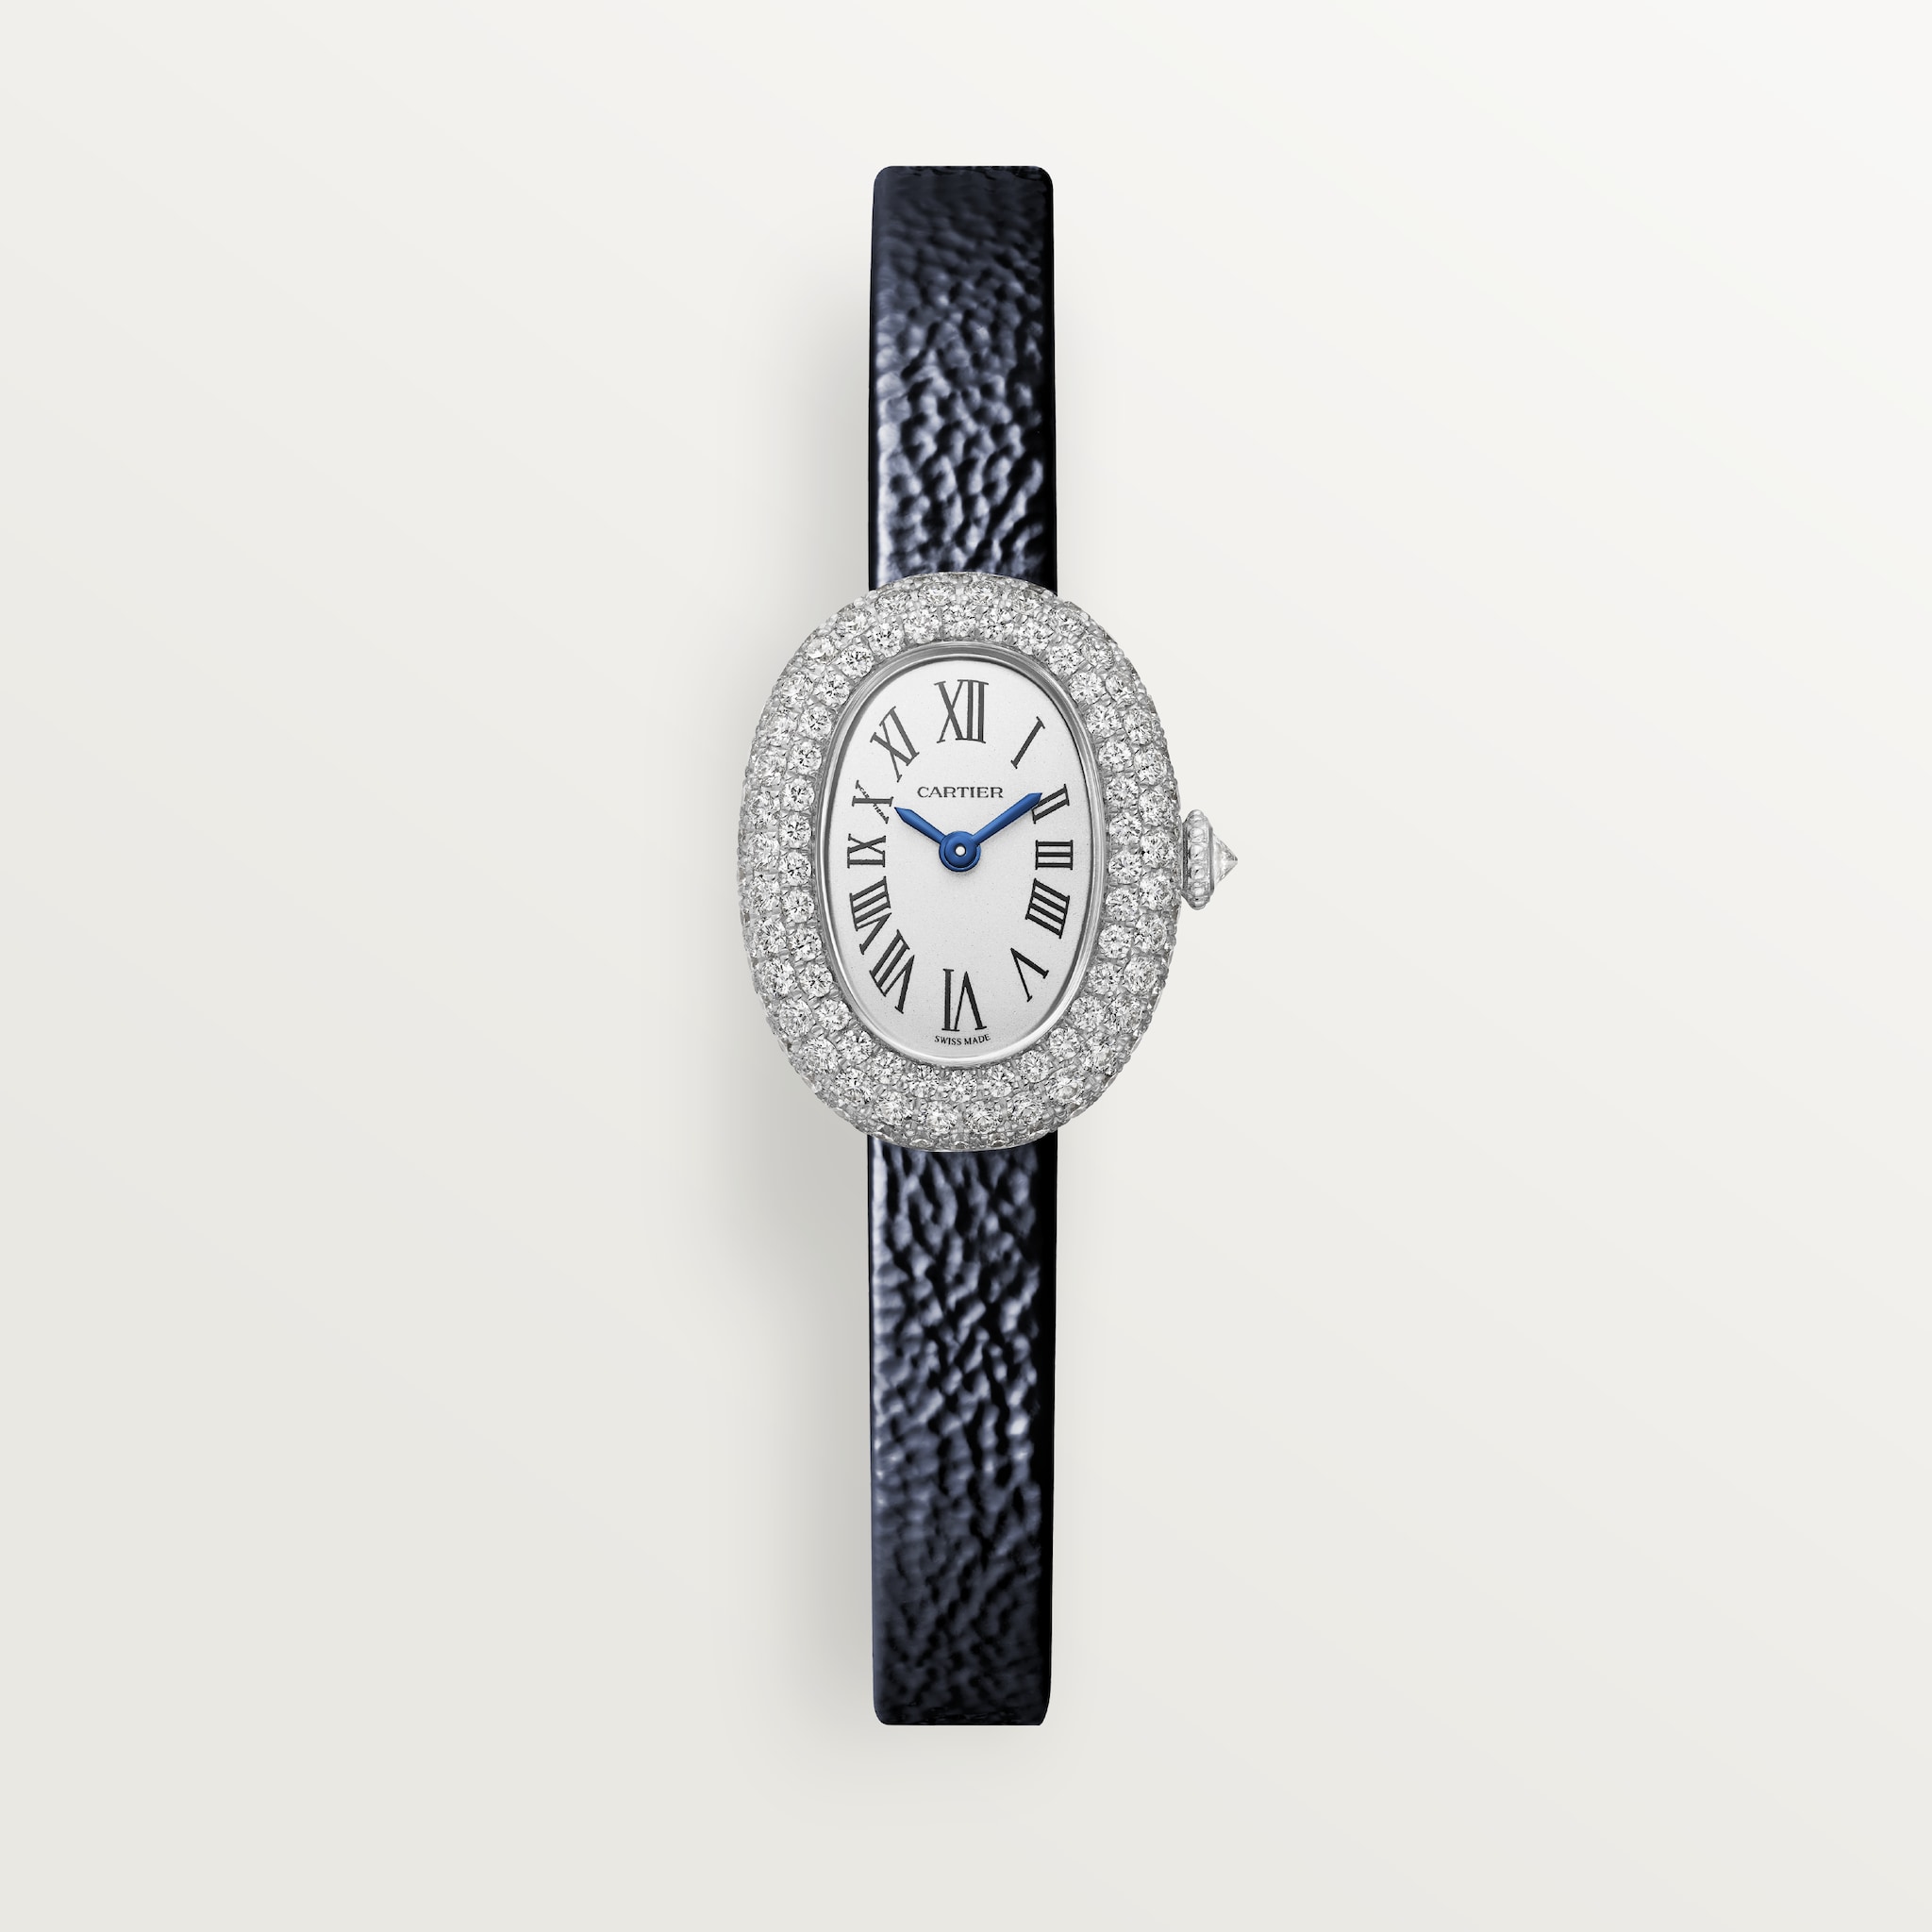 Baignoire watchMini model, quartz movement, white gold, diamonds, leather